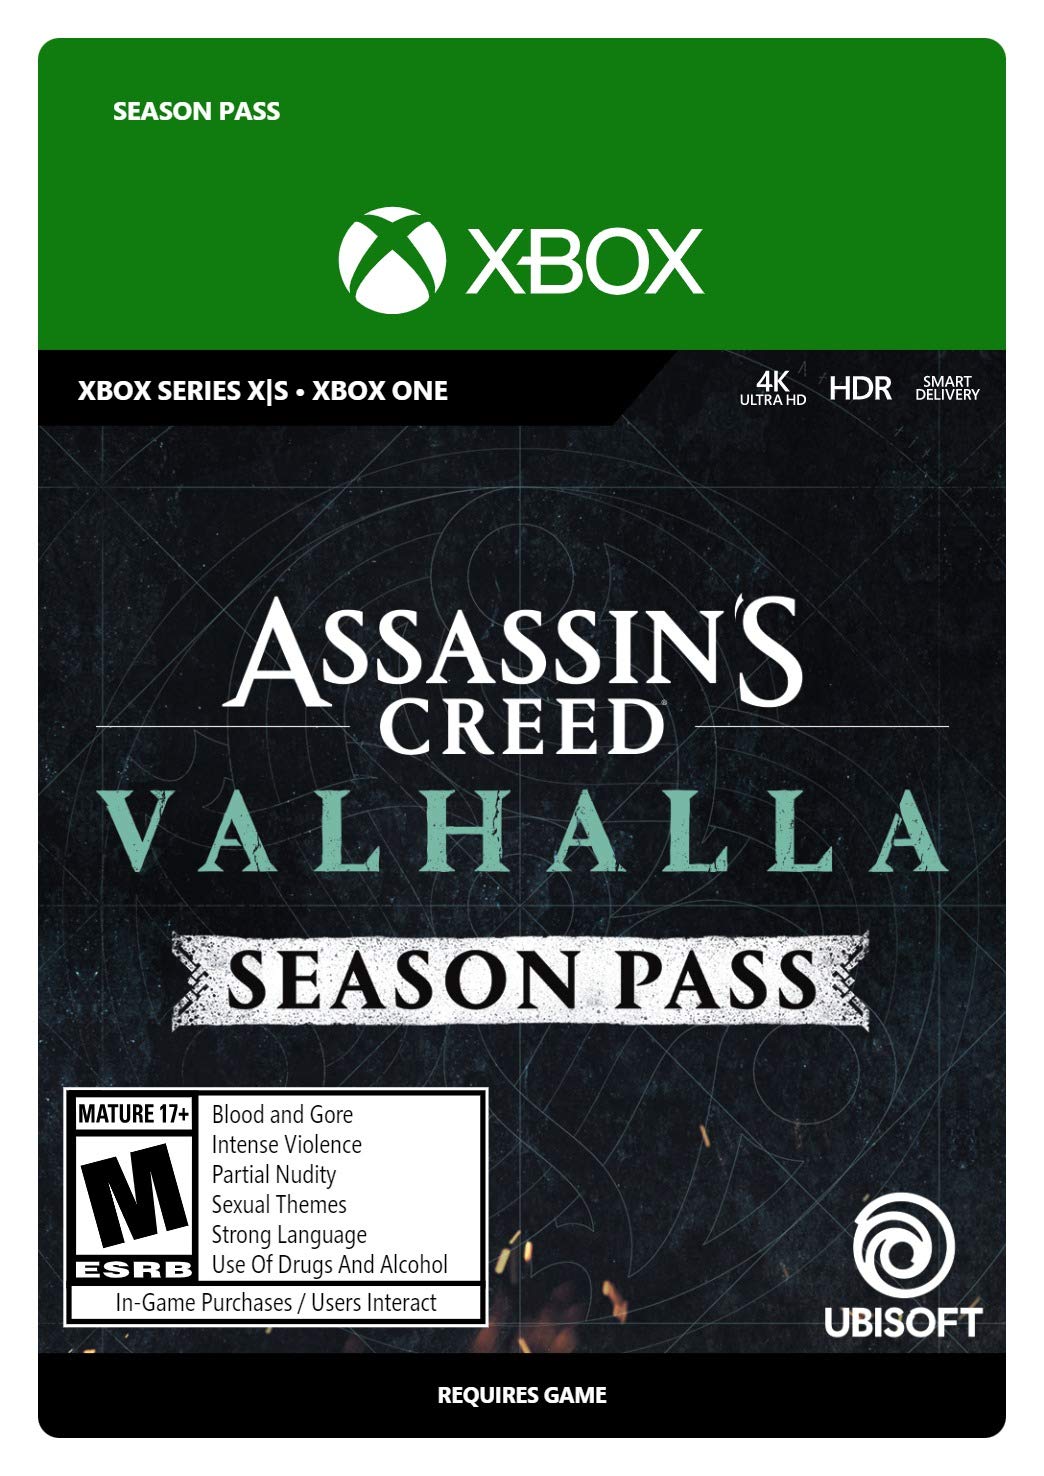 Assassin's Creed Valhalla Season Pass - Xbox Series X|S, Xbox One [Digital Code] $10